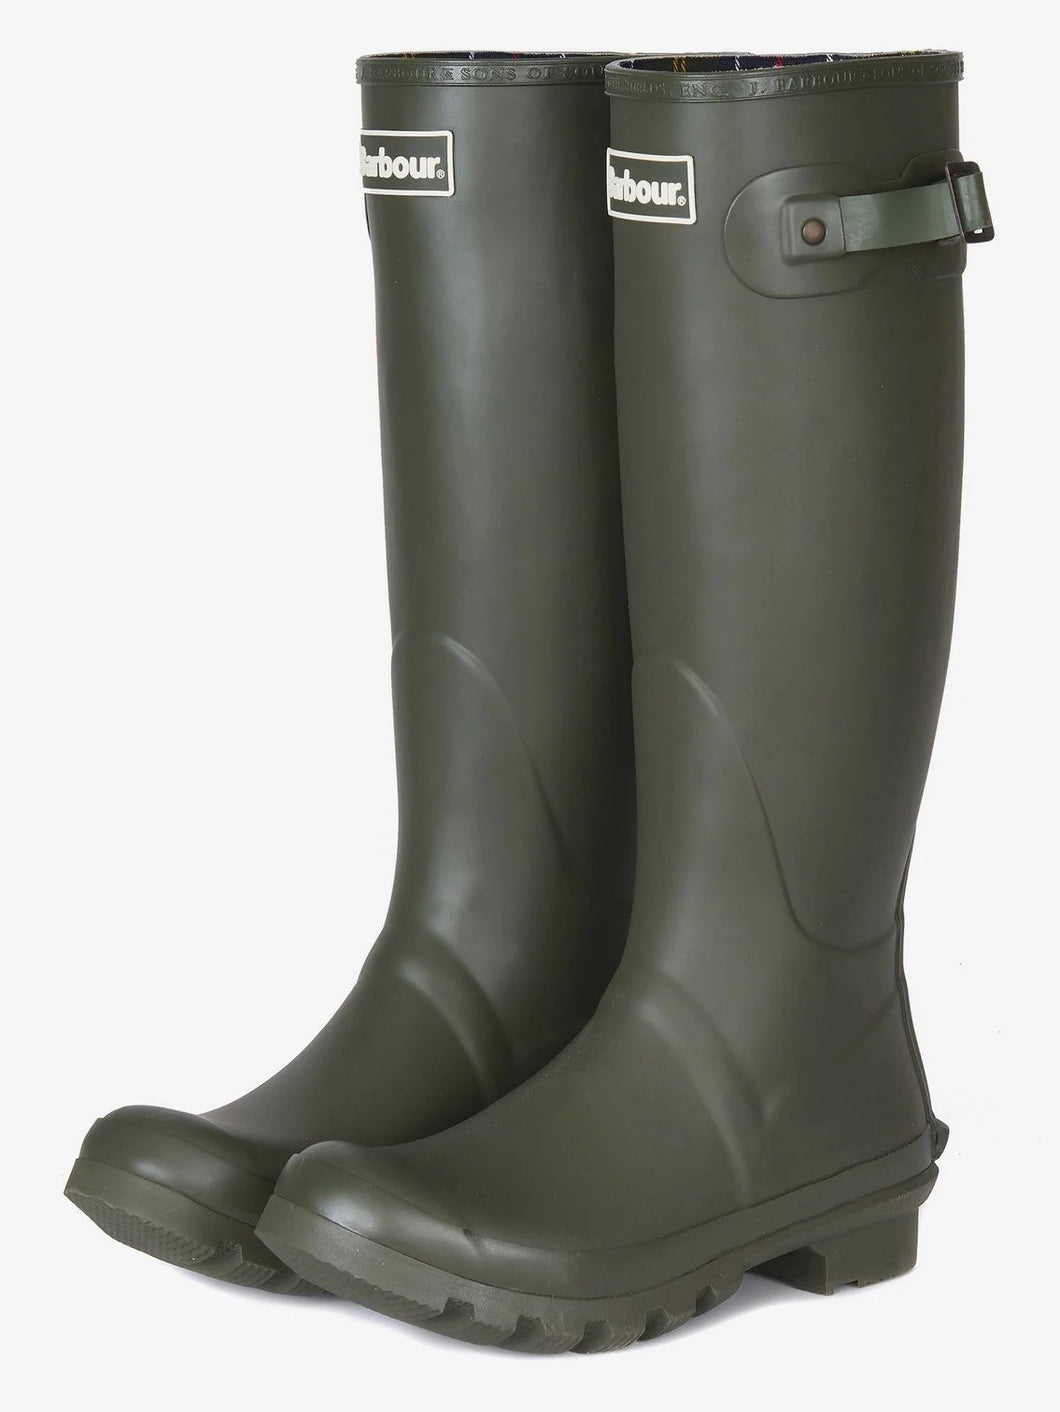 50% OFF - Barbour Bede Ladies Wellington Boots - Olive - Size: UK 3